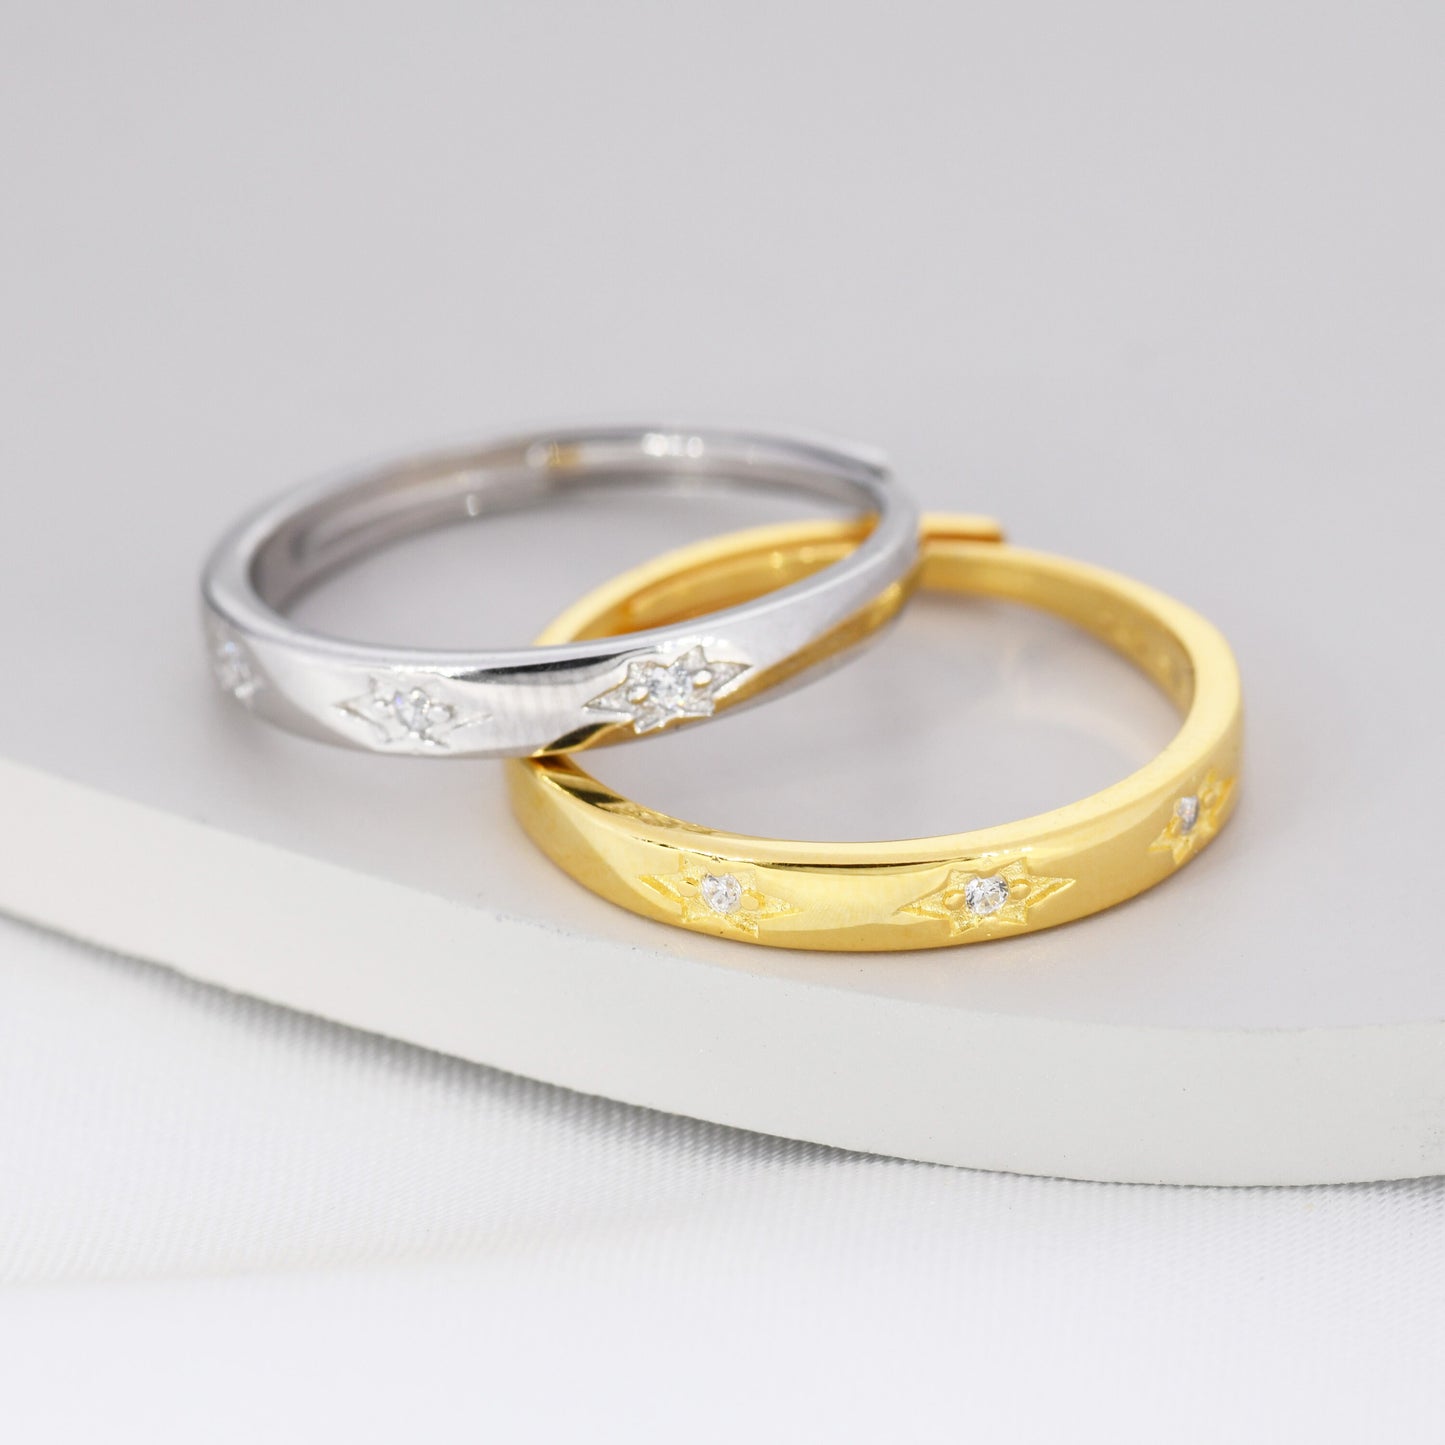 Starburst Ring in Sterling Silver, Adjustable Ring, Silver or Gold, CZ Star Ring, North Star Ring Band